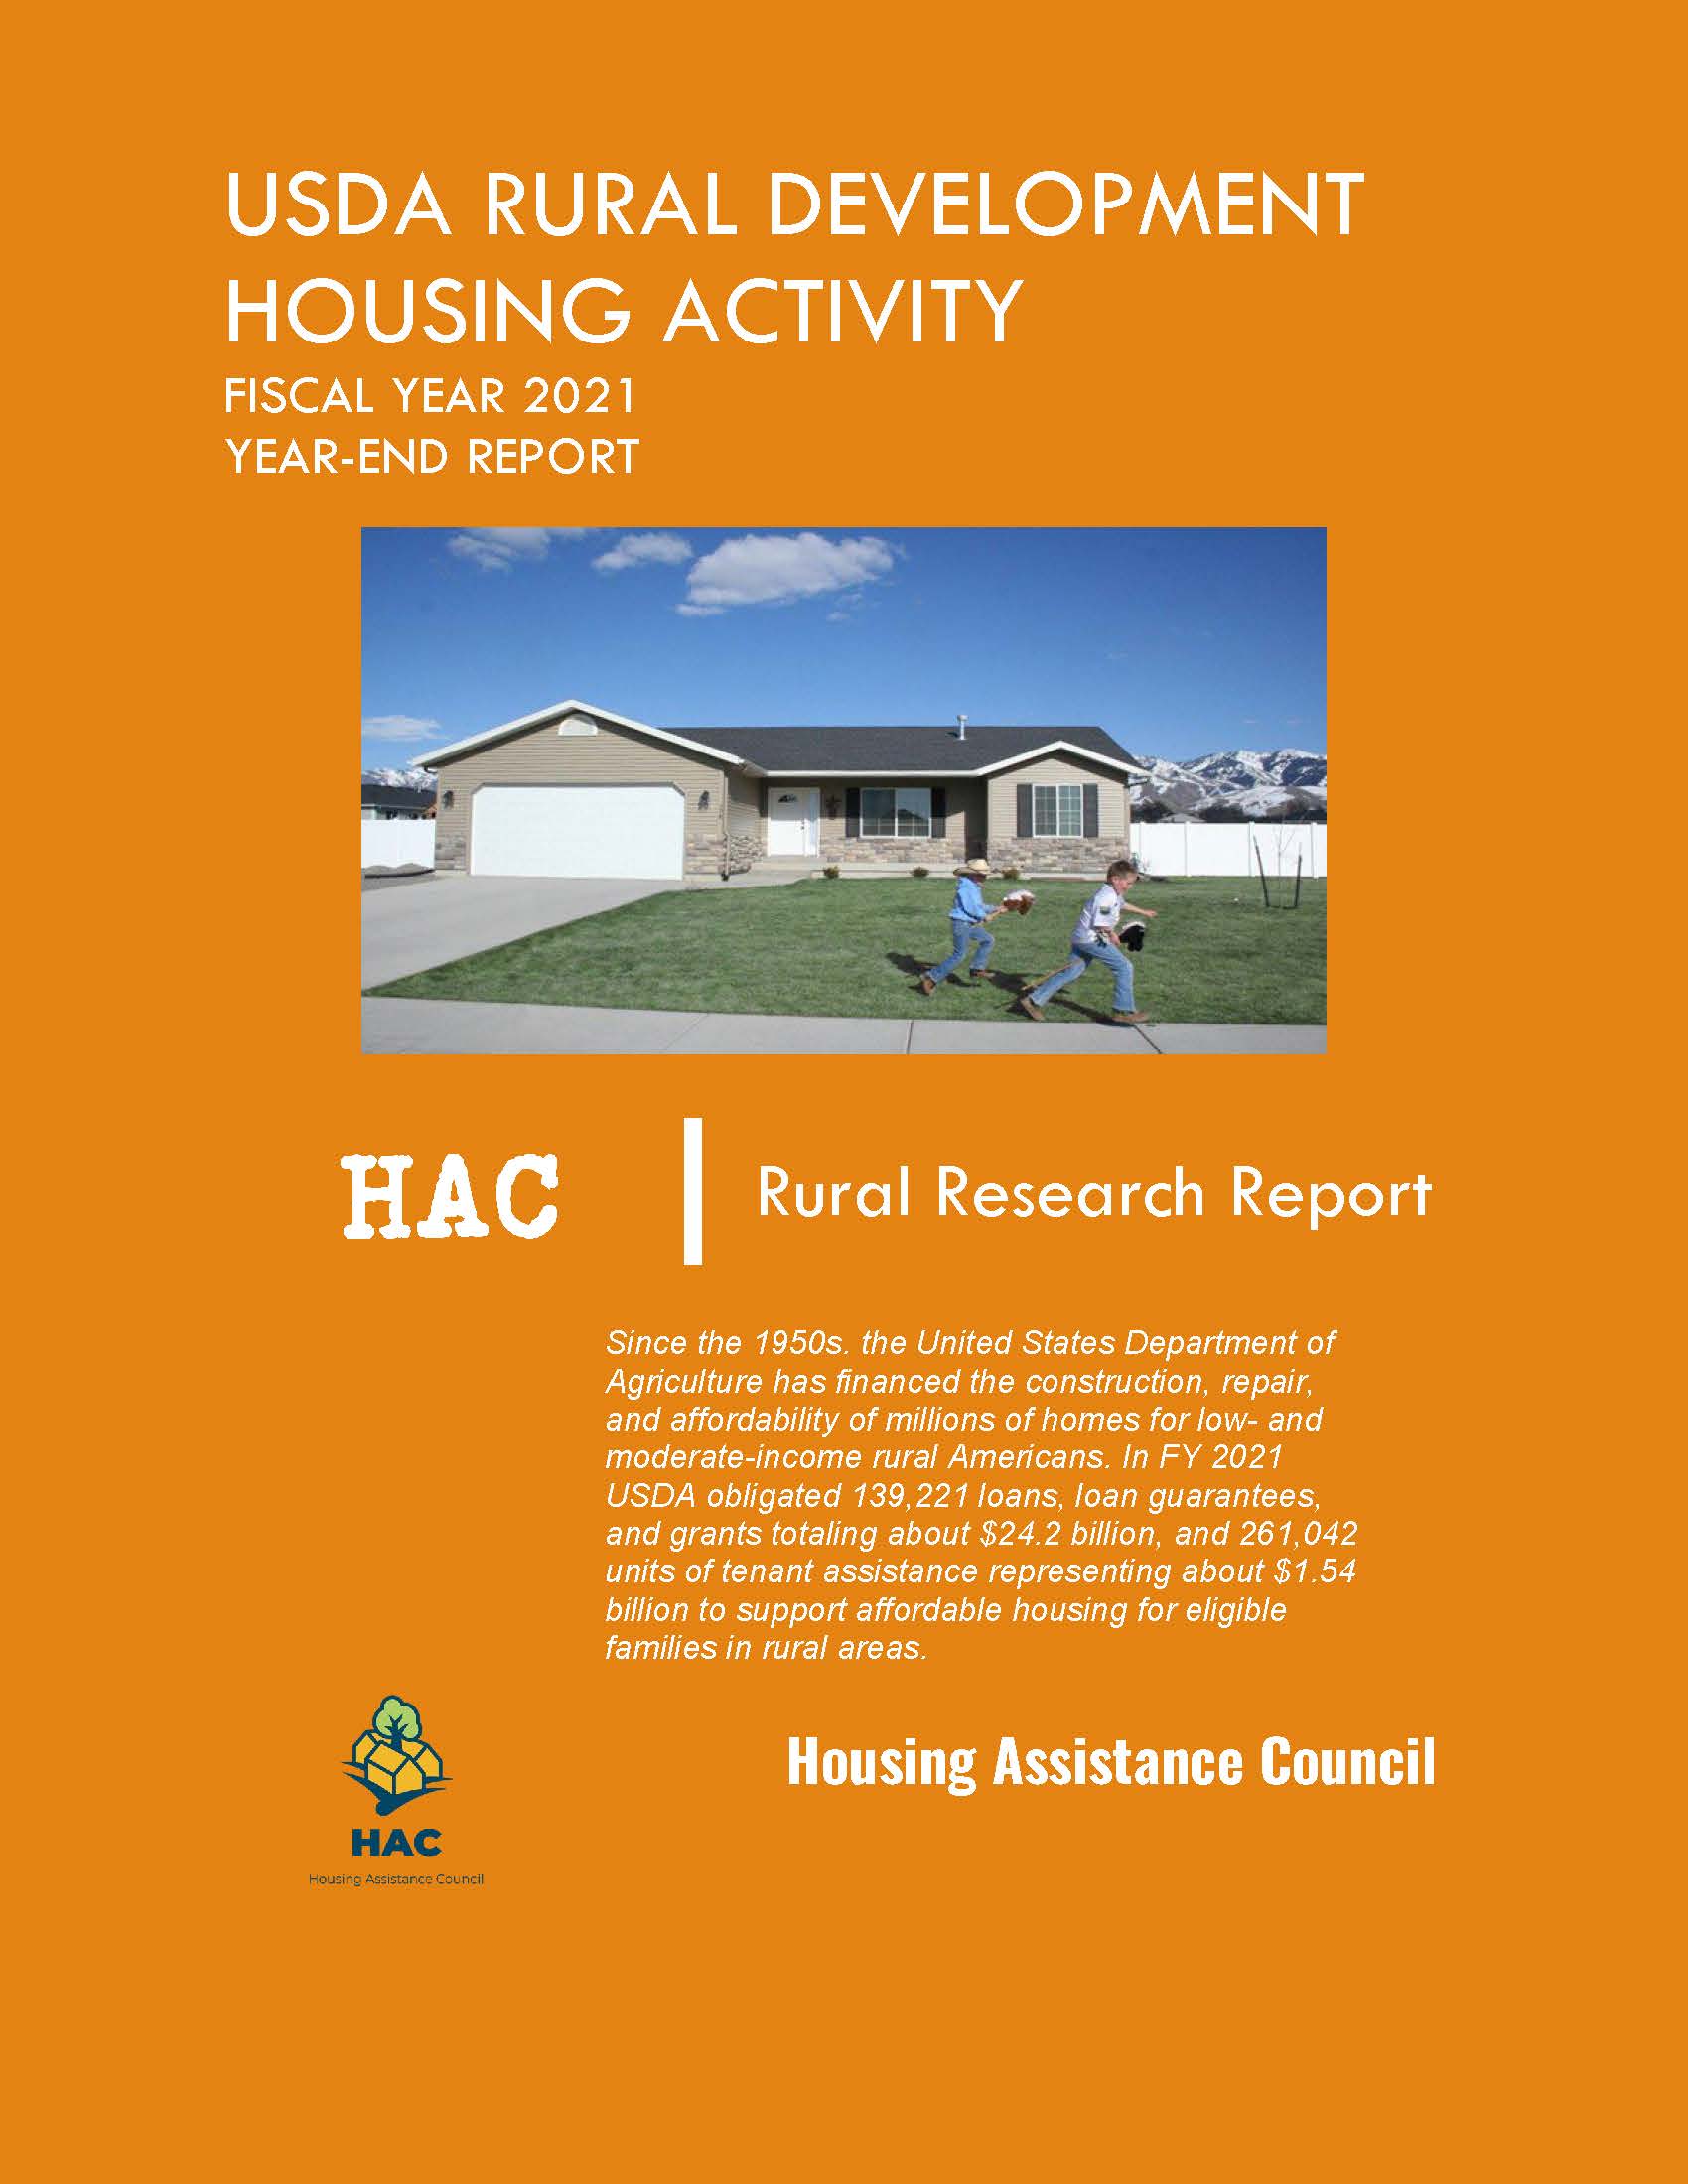 Fiscal Year 2021 USDA Rural Development Housing Activity Report